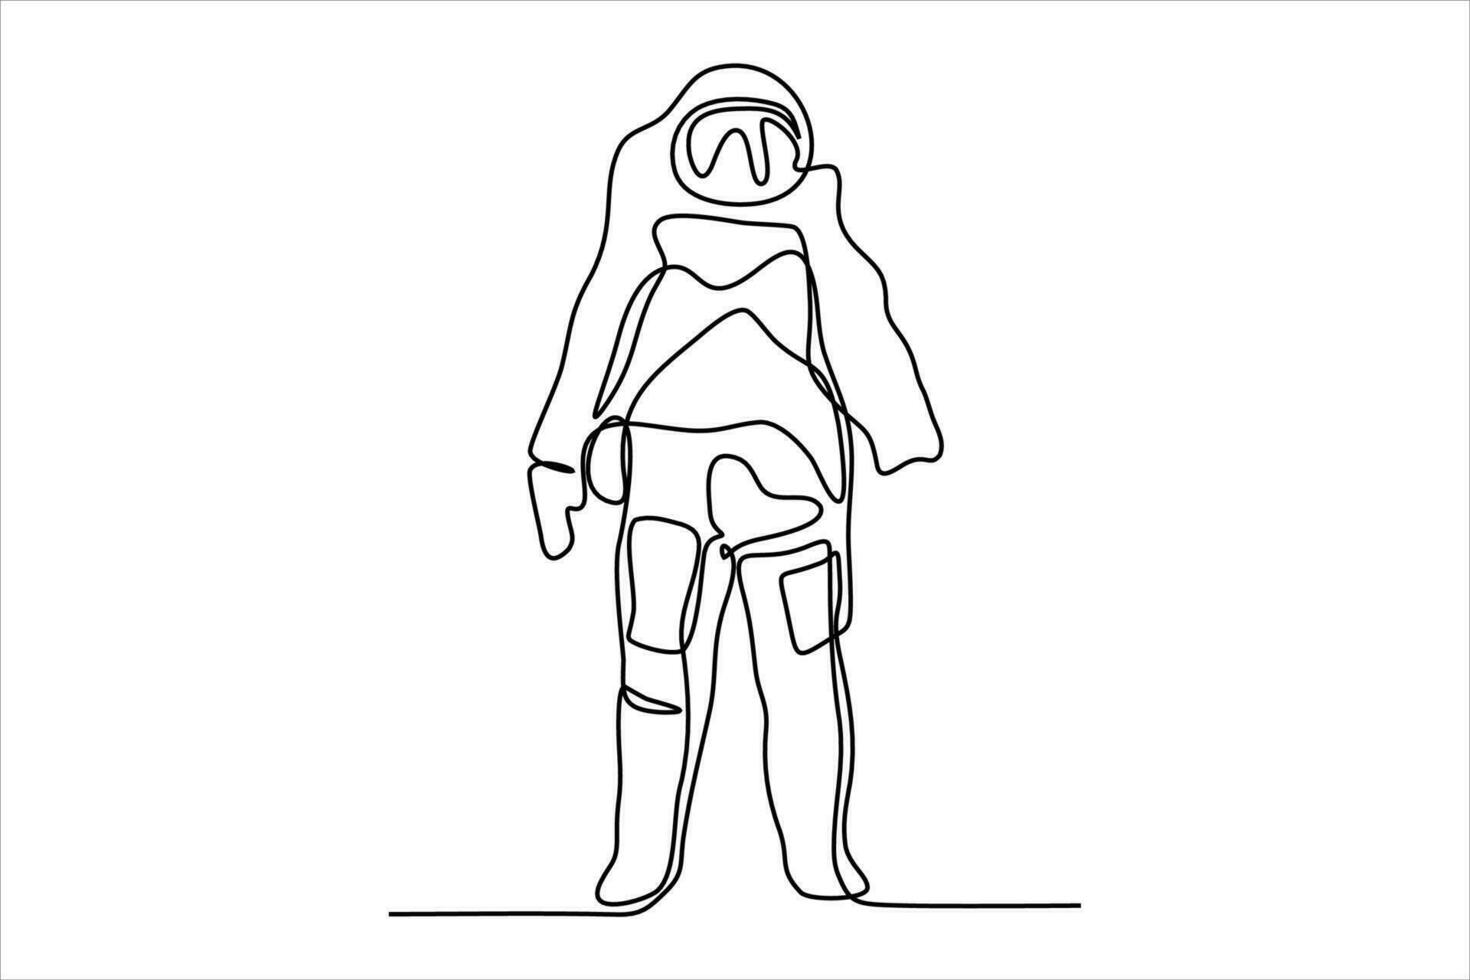 kontinuerlig linje illustration av ett astronaut vektor